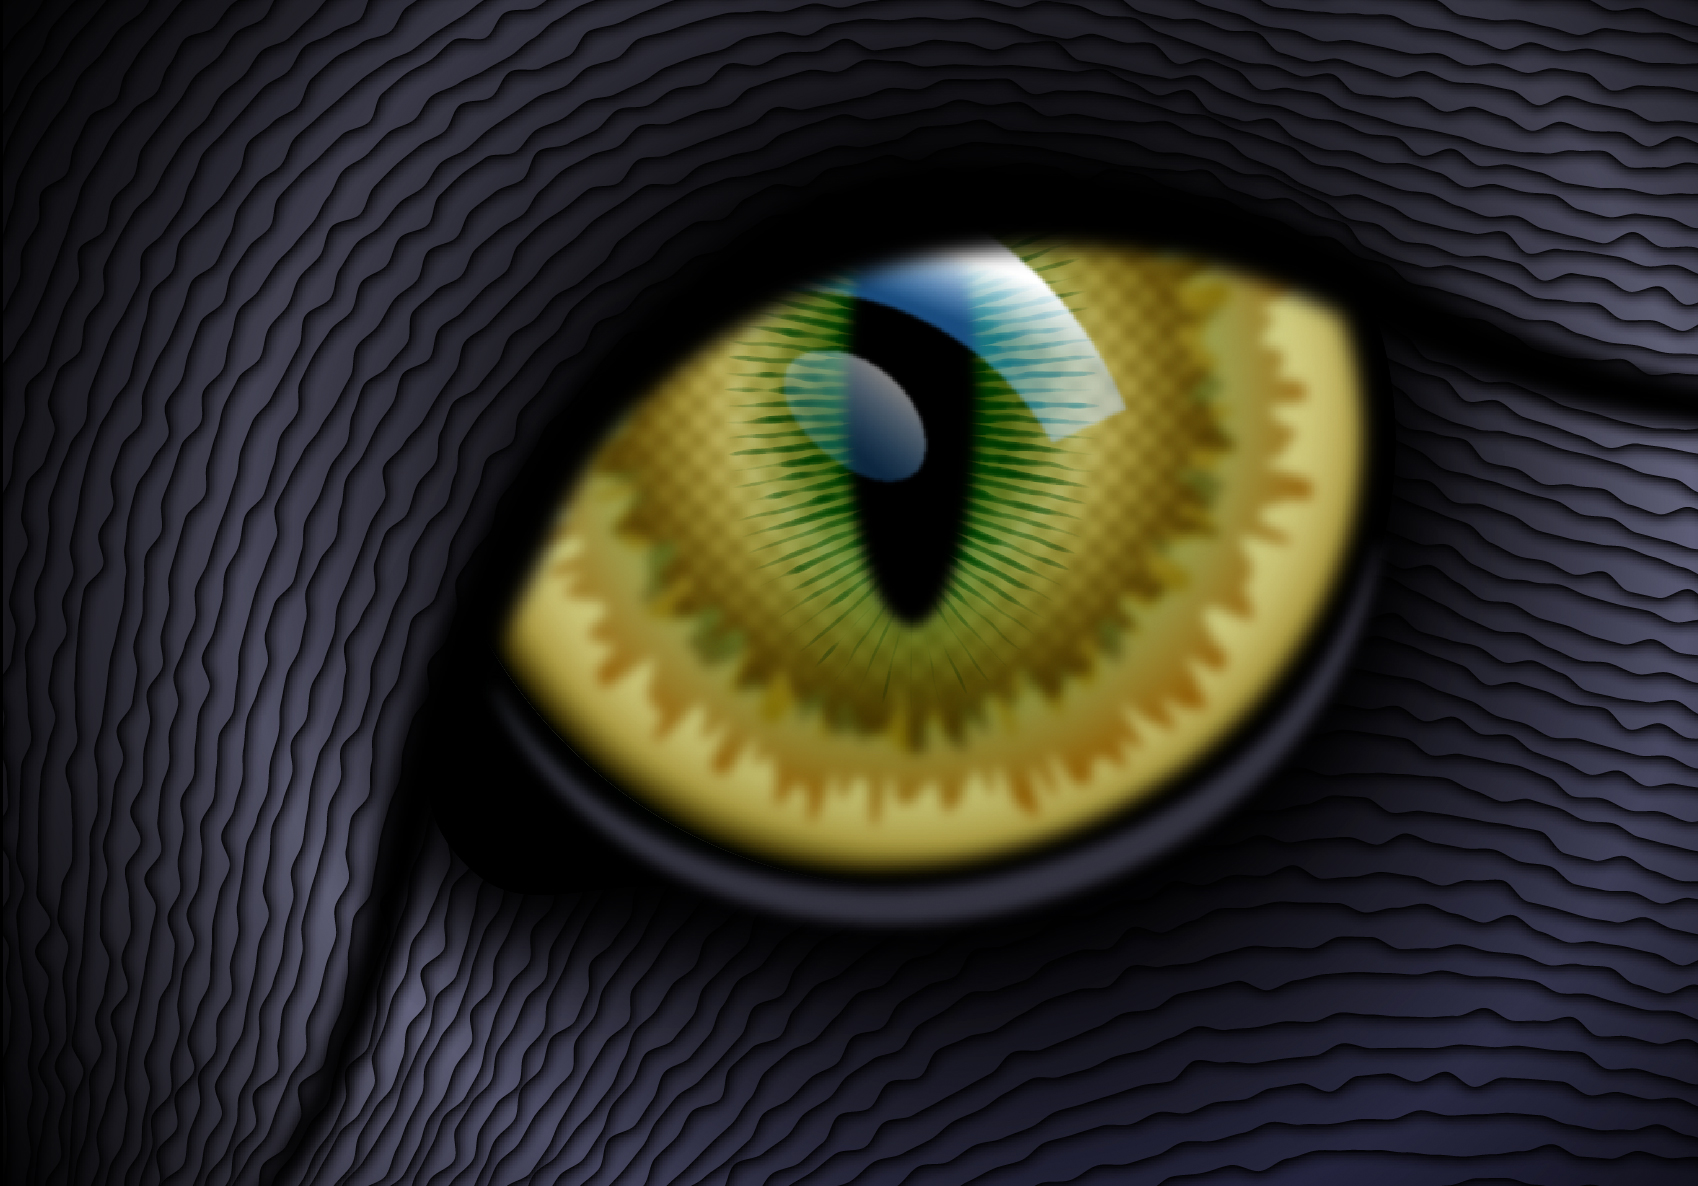 a cat eye created in Illustrator